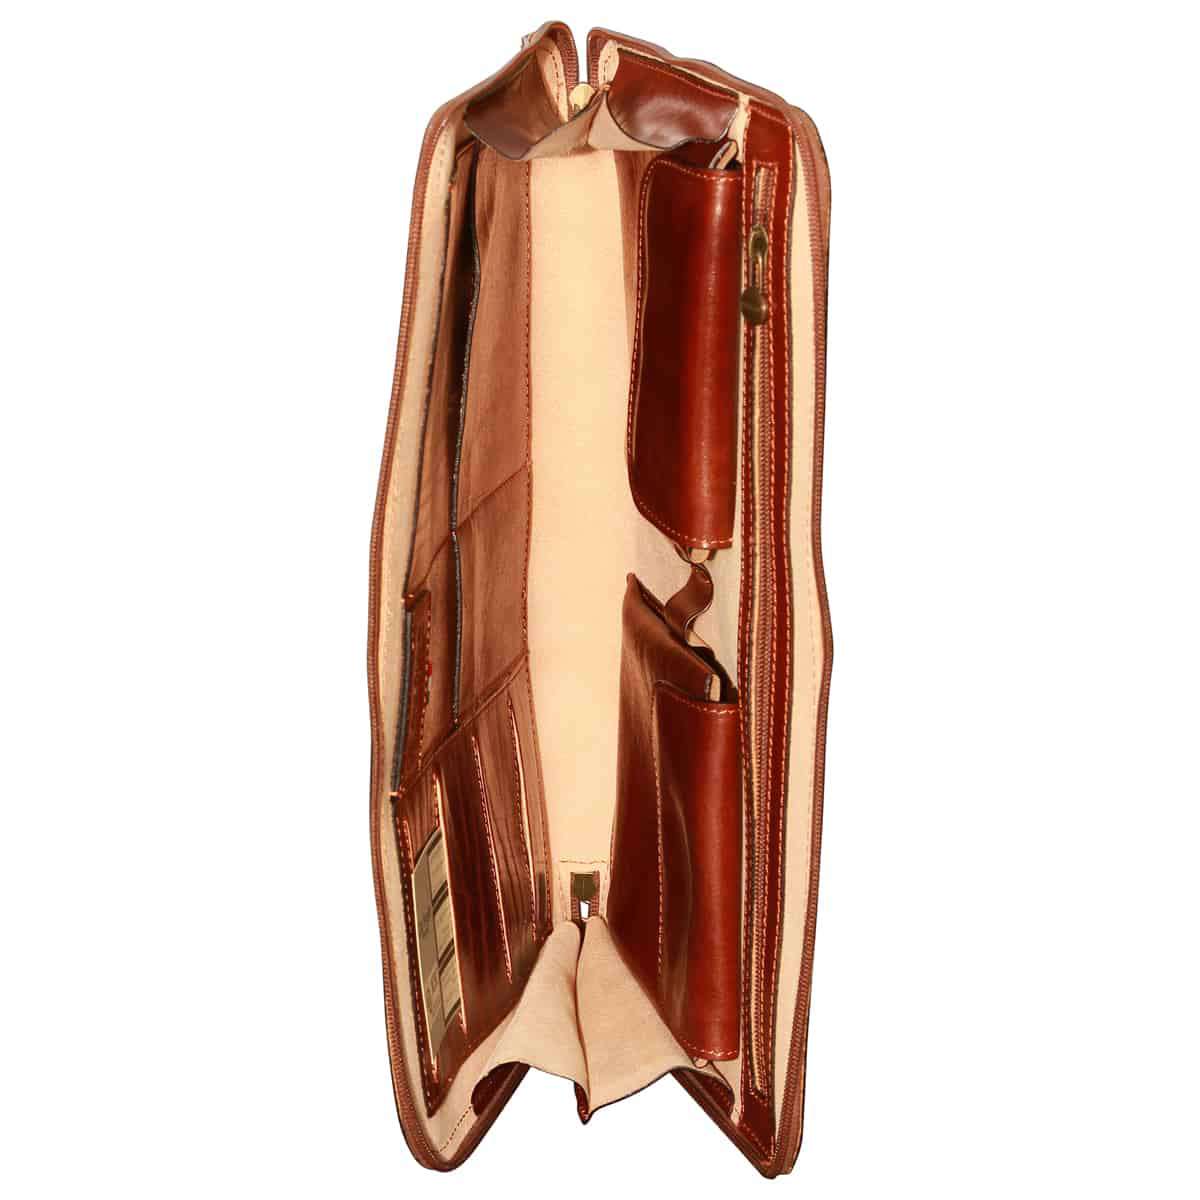 Leather Folder - Brown | 056805MA UK | Old Angler Firenze